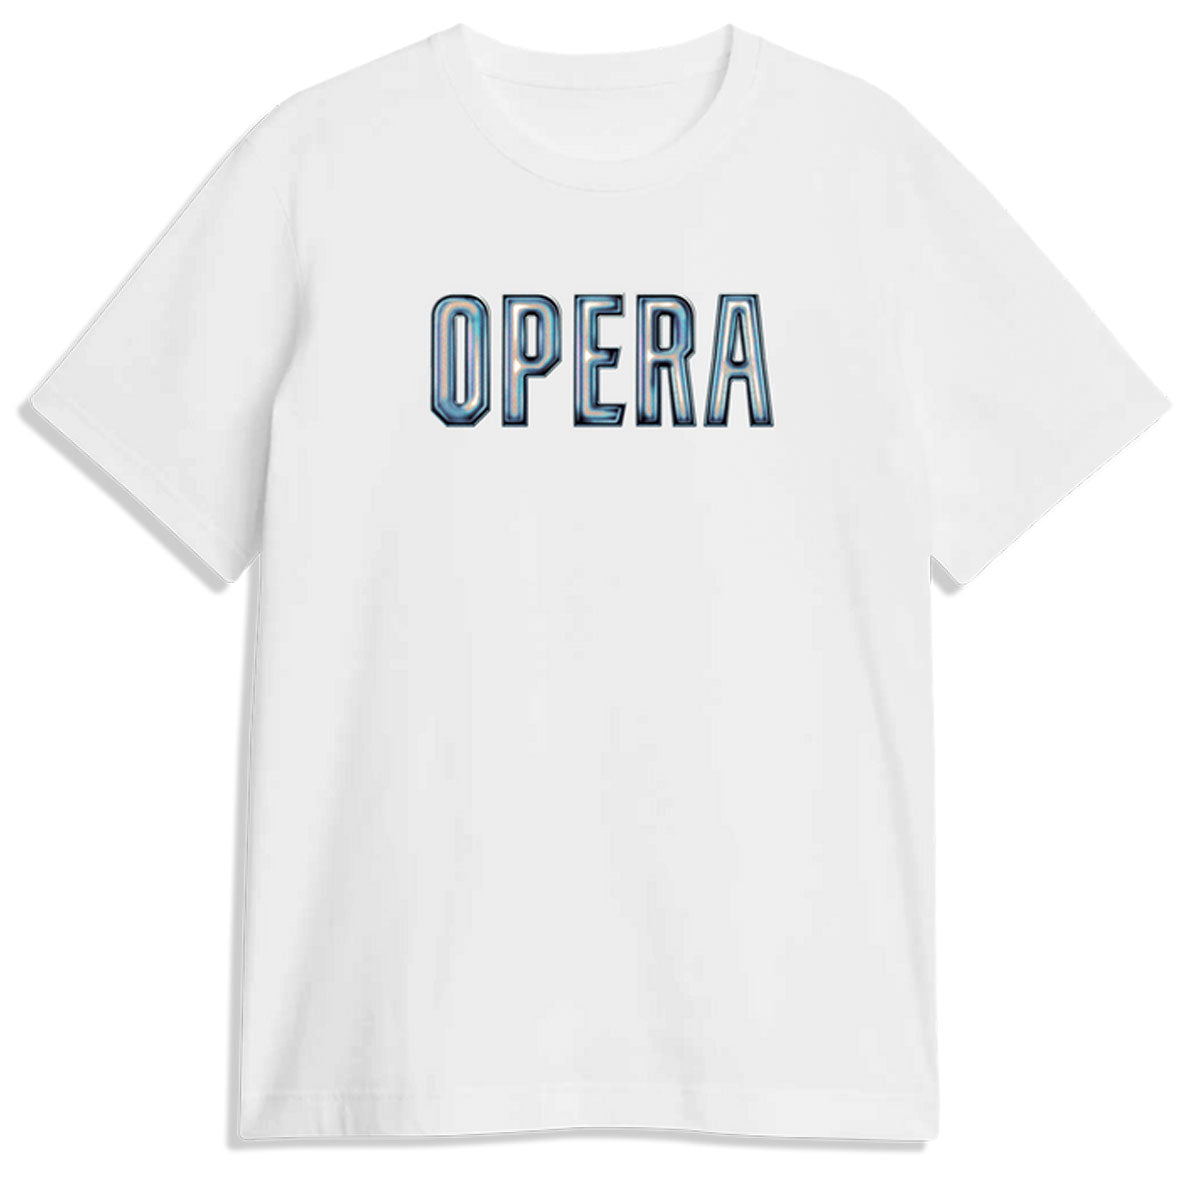 Opera 3D T-Shirt - White image 1